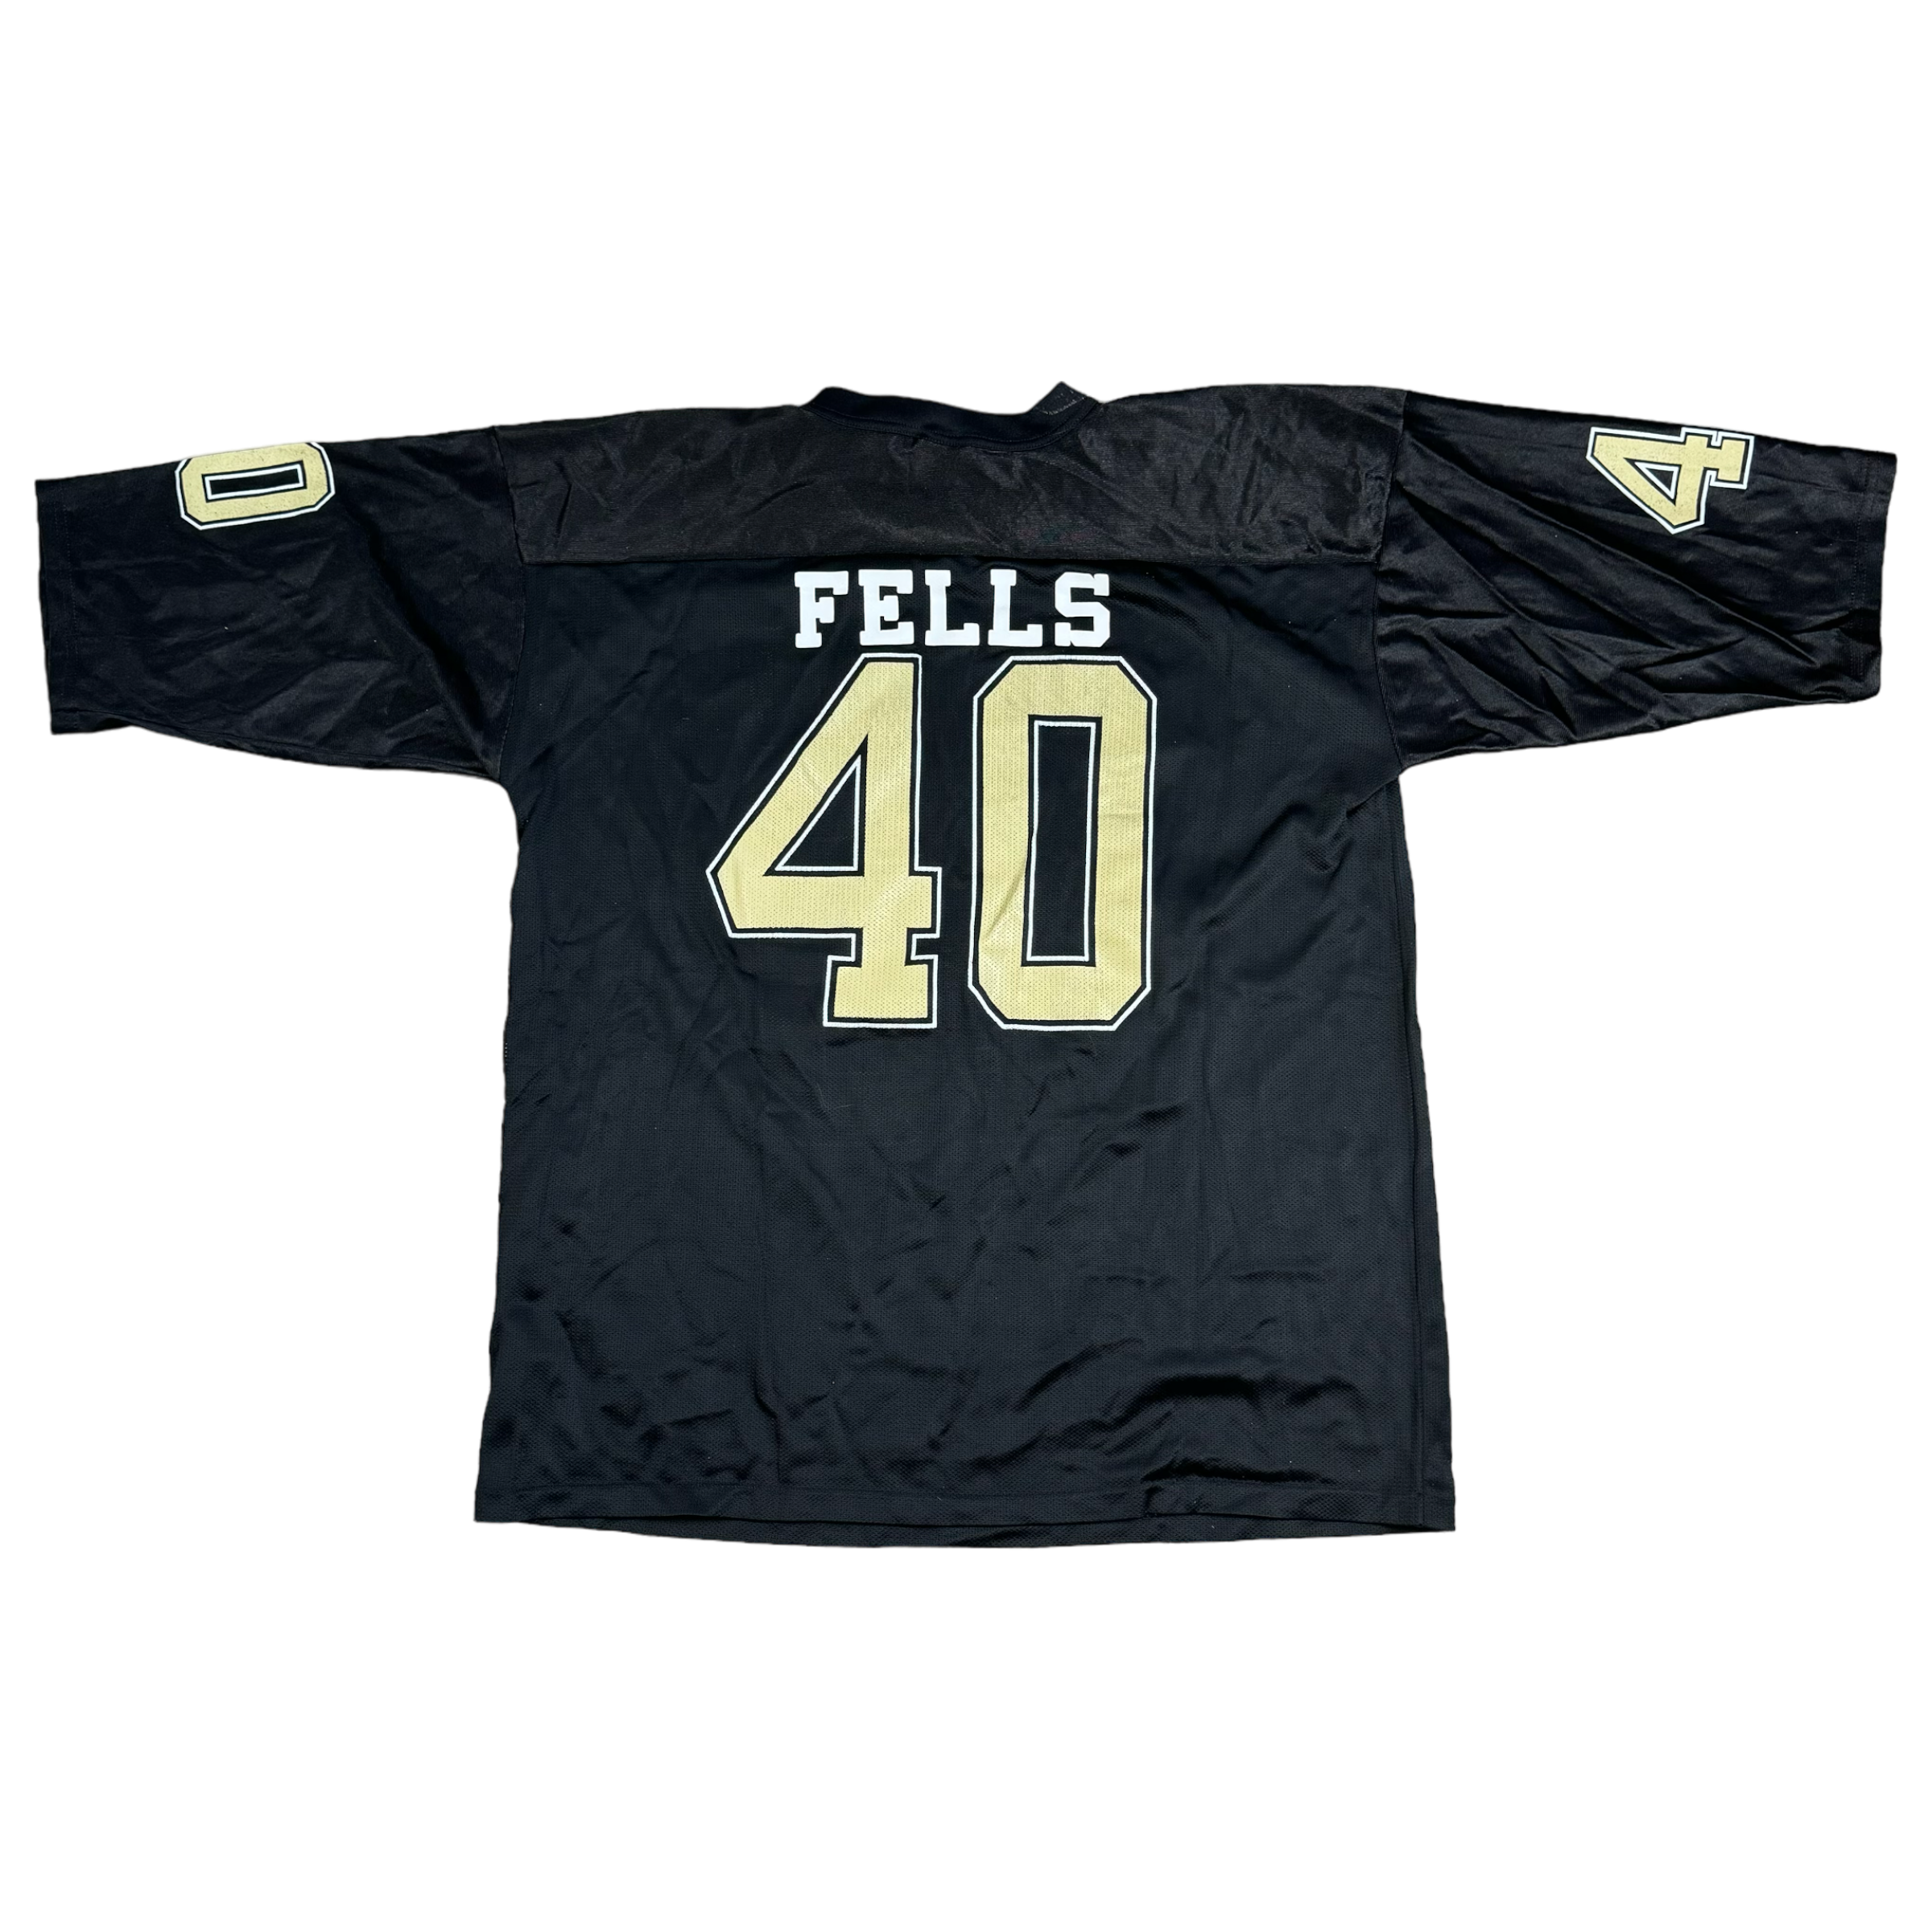 Willie Fells Jersey